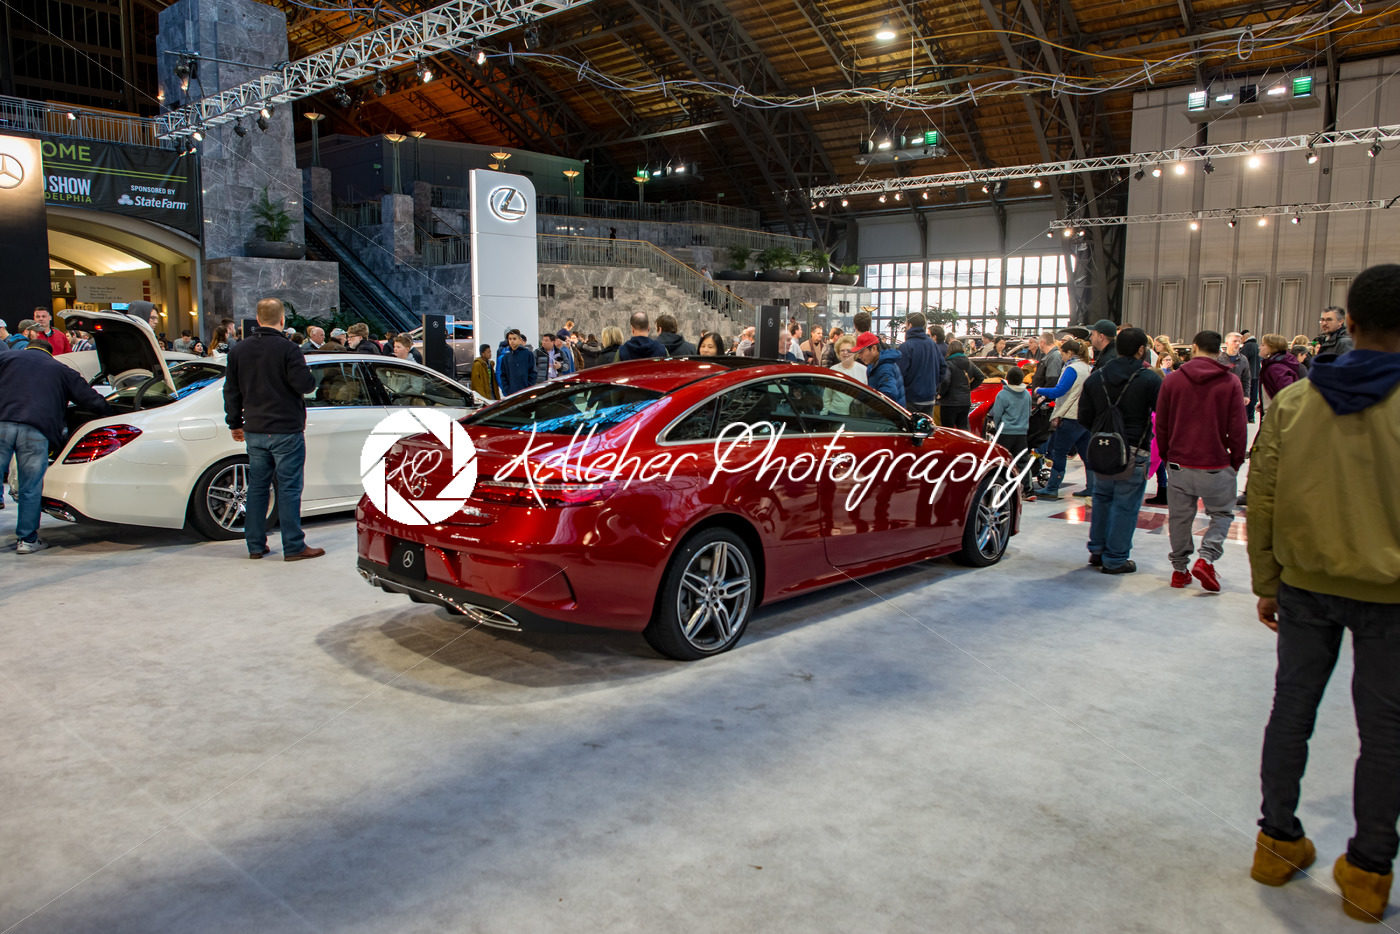 PHILADELPHIA, PA – Feb 3: Lexus at the 2018 Philadelphia Auto Show - Kelleher Photography Store